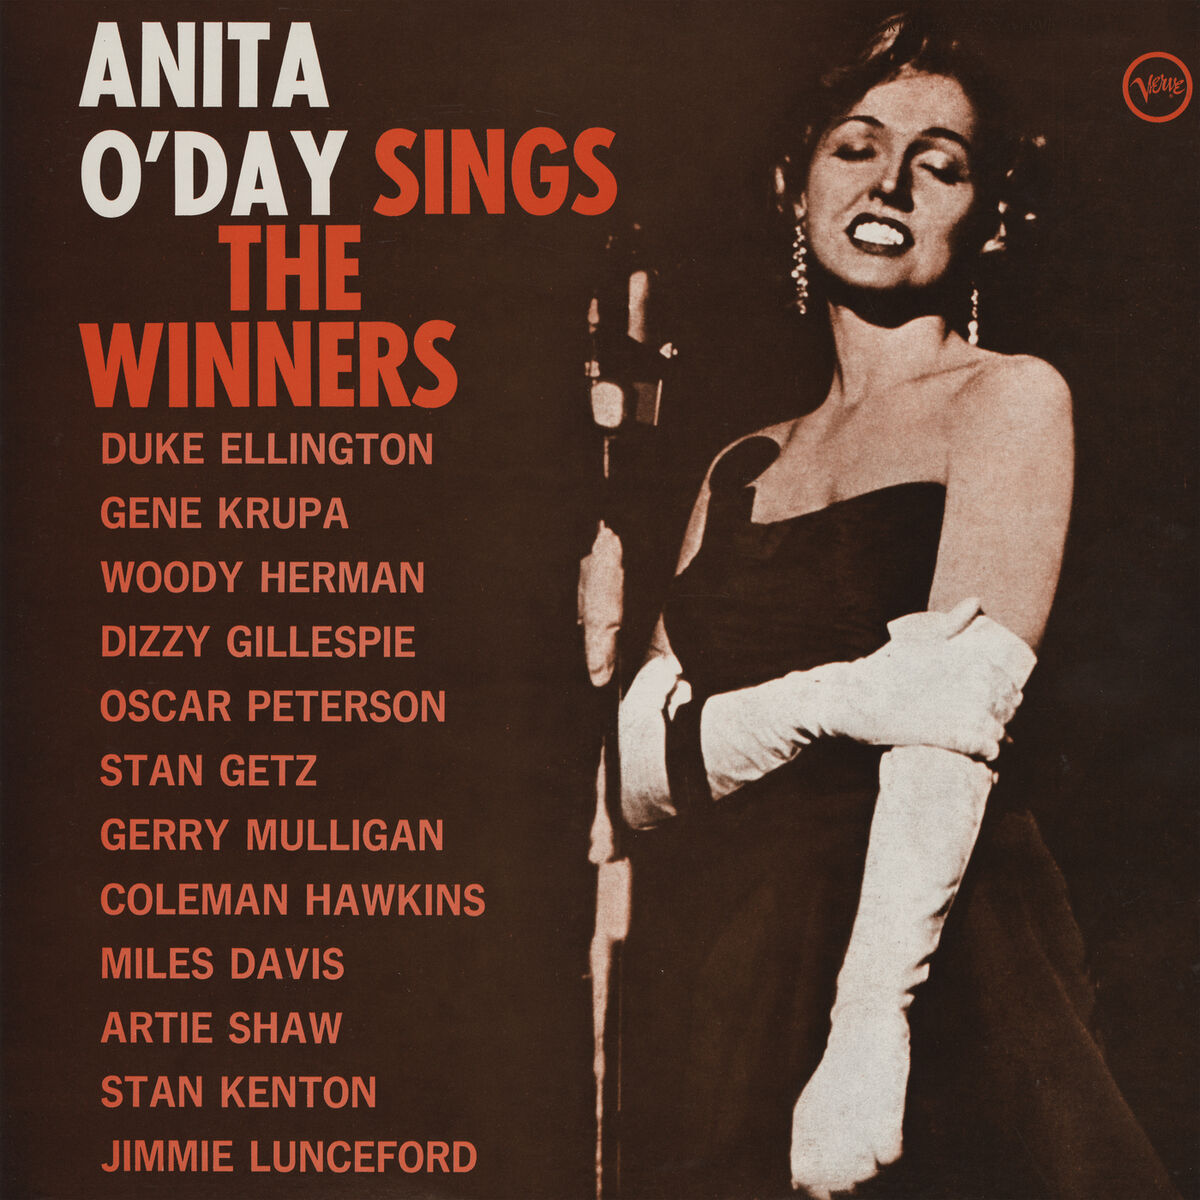 Anita O'Day: albums, songs, playlists | Listen on Deezer